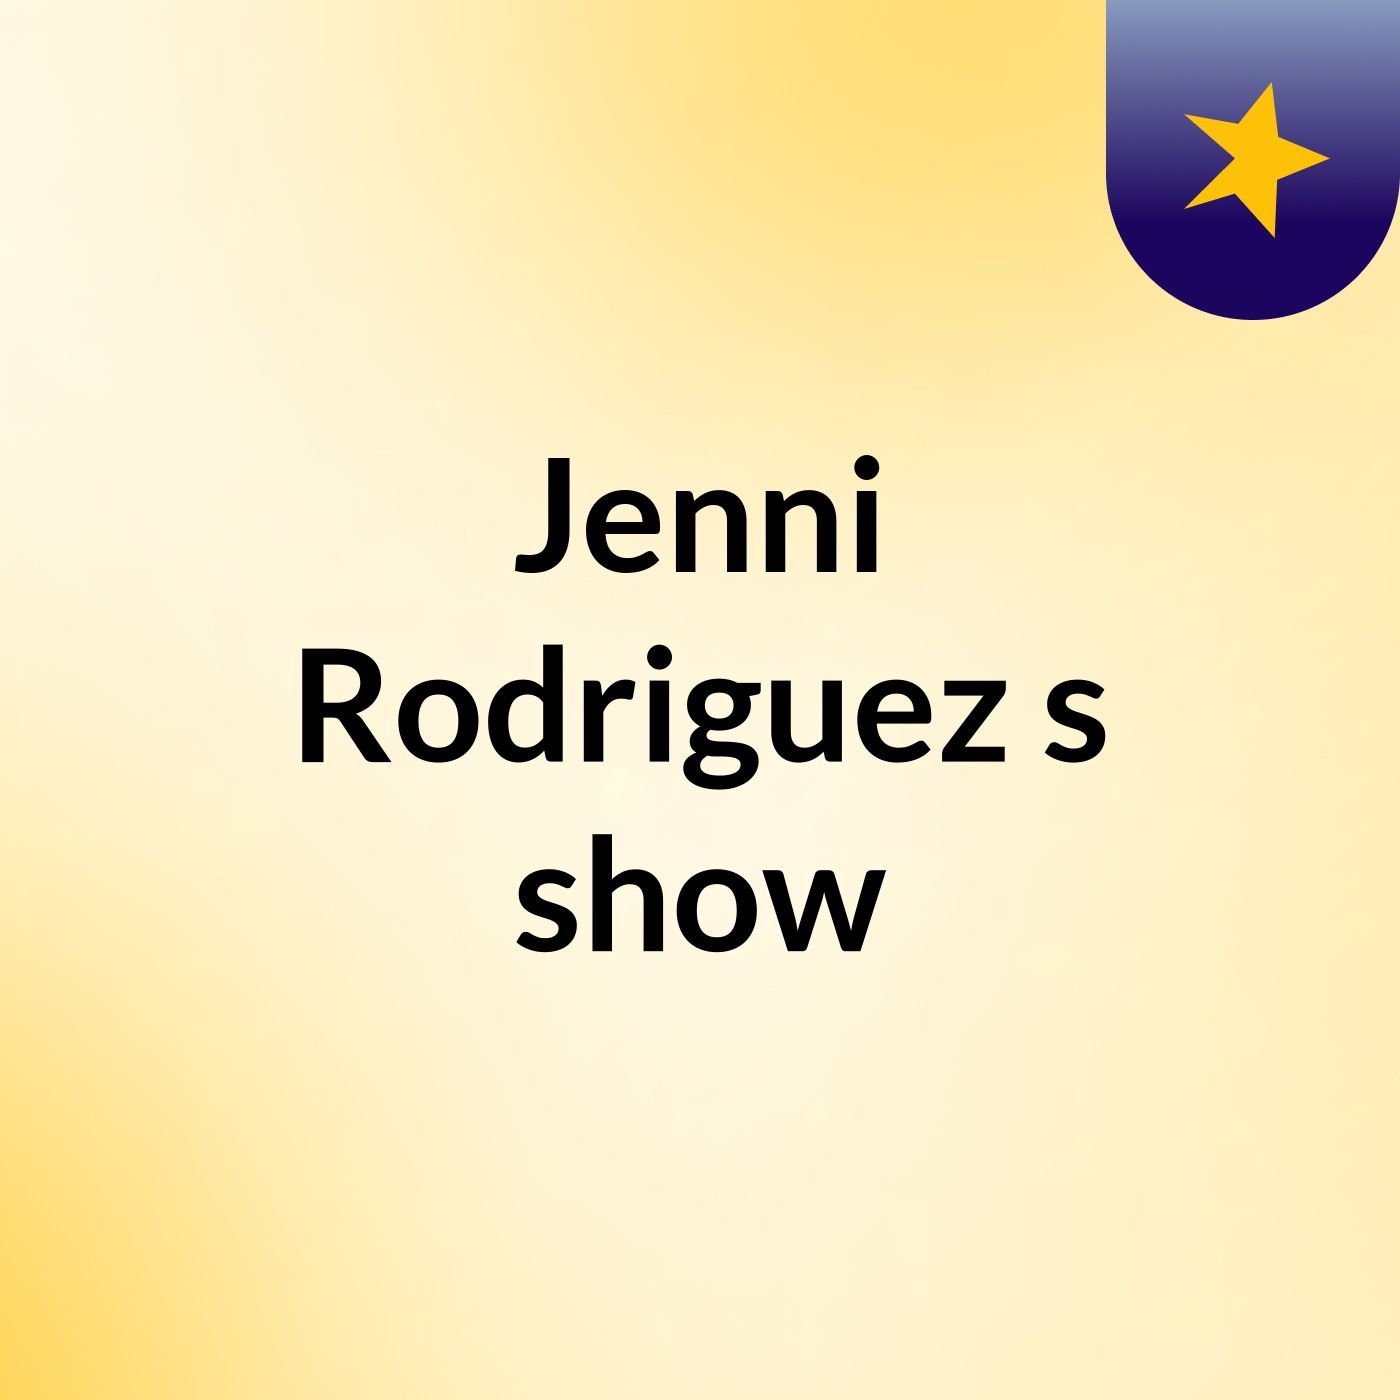 Jenni Rodriguez's show